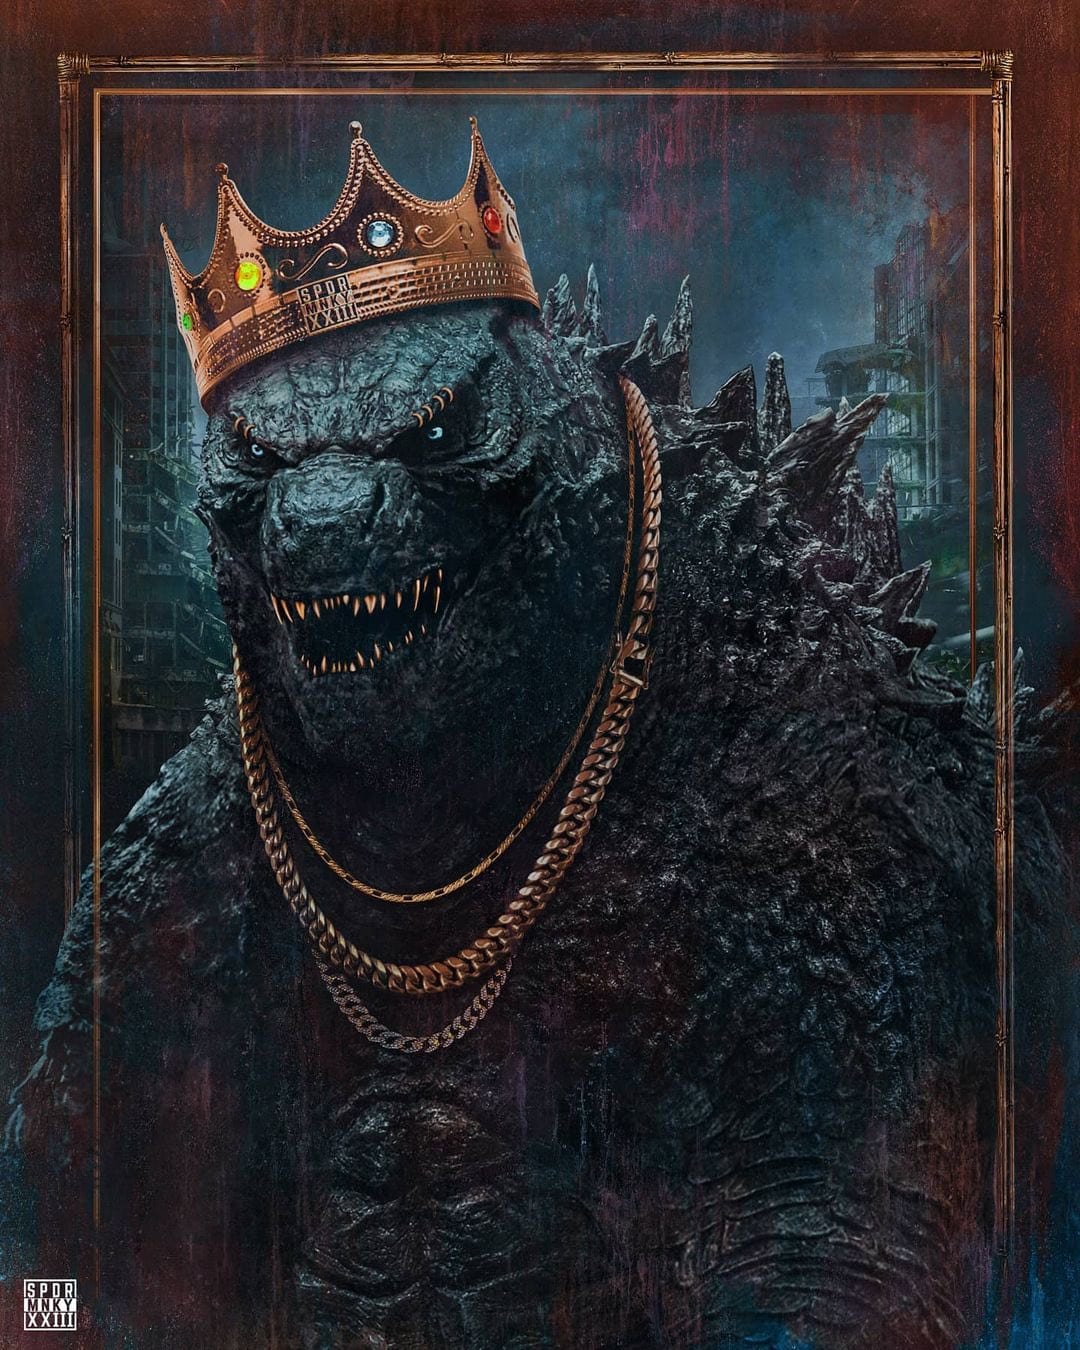 Godzilla vs Kong: due nuovi artwork del monster movie